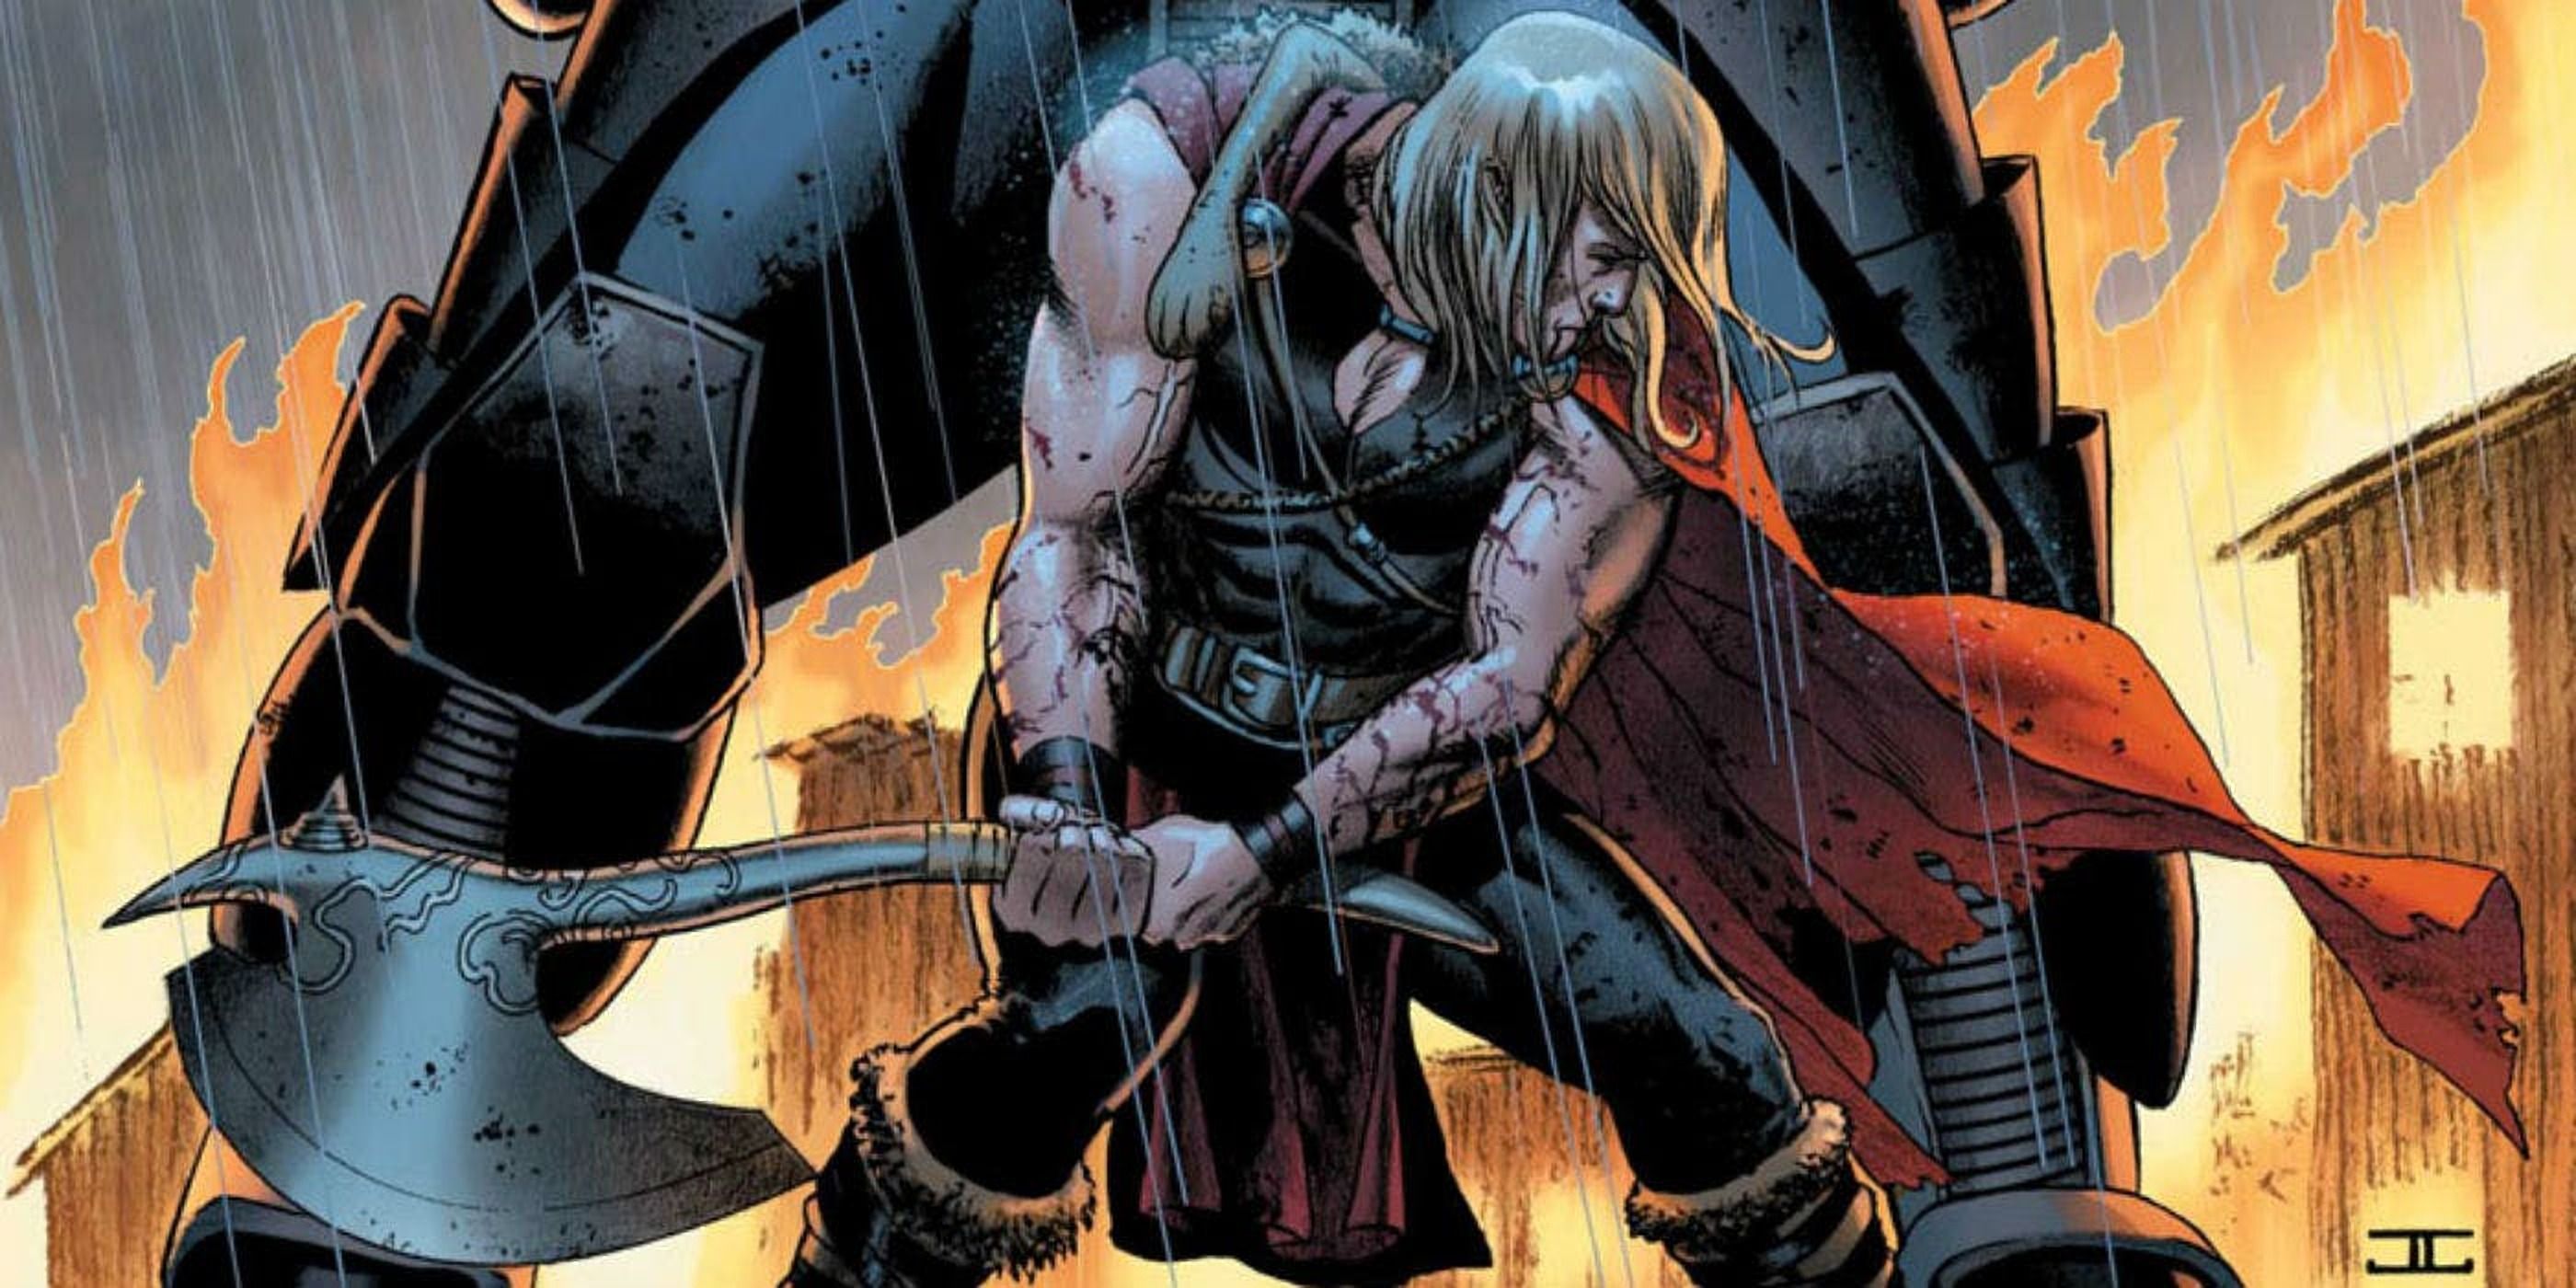 Thor wielding Jarnbjorn against Apocalypse